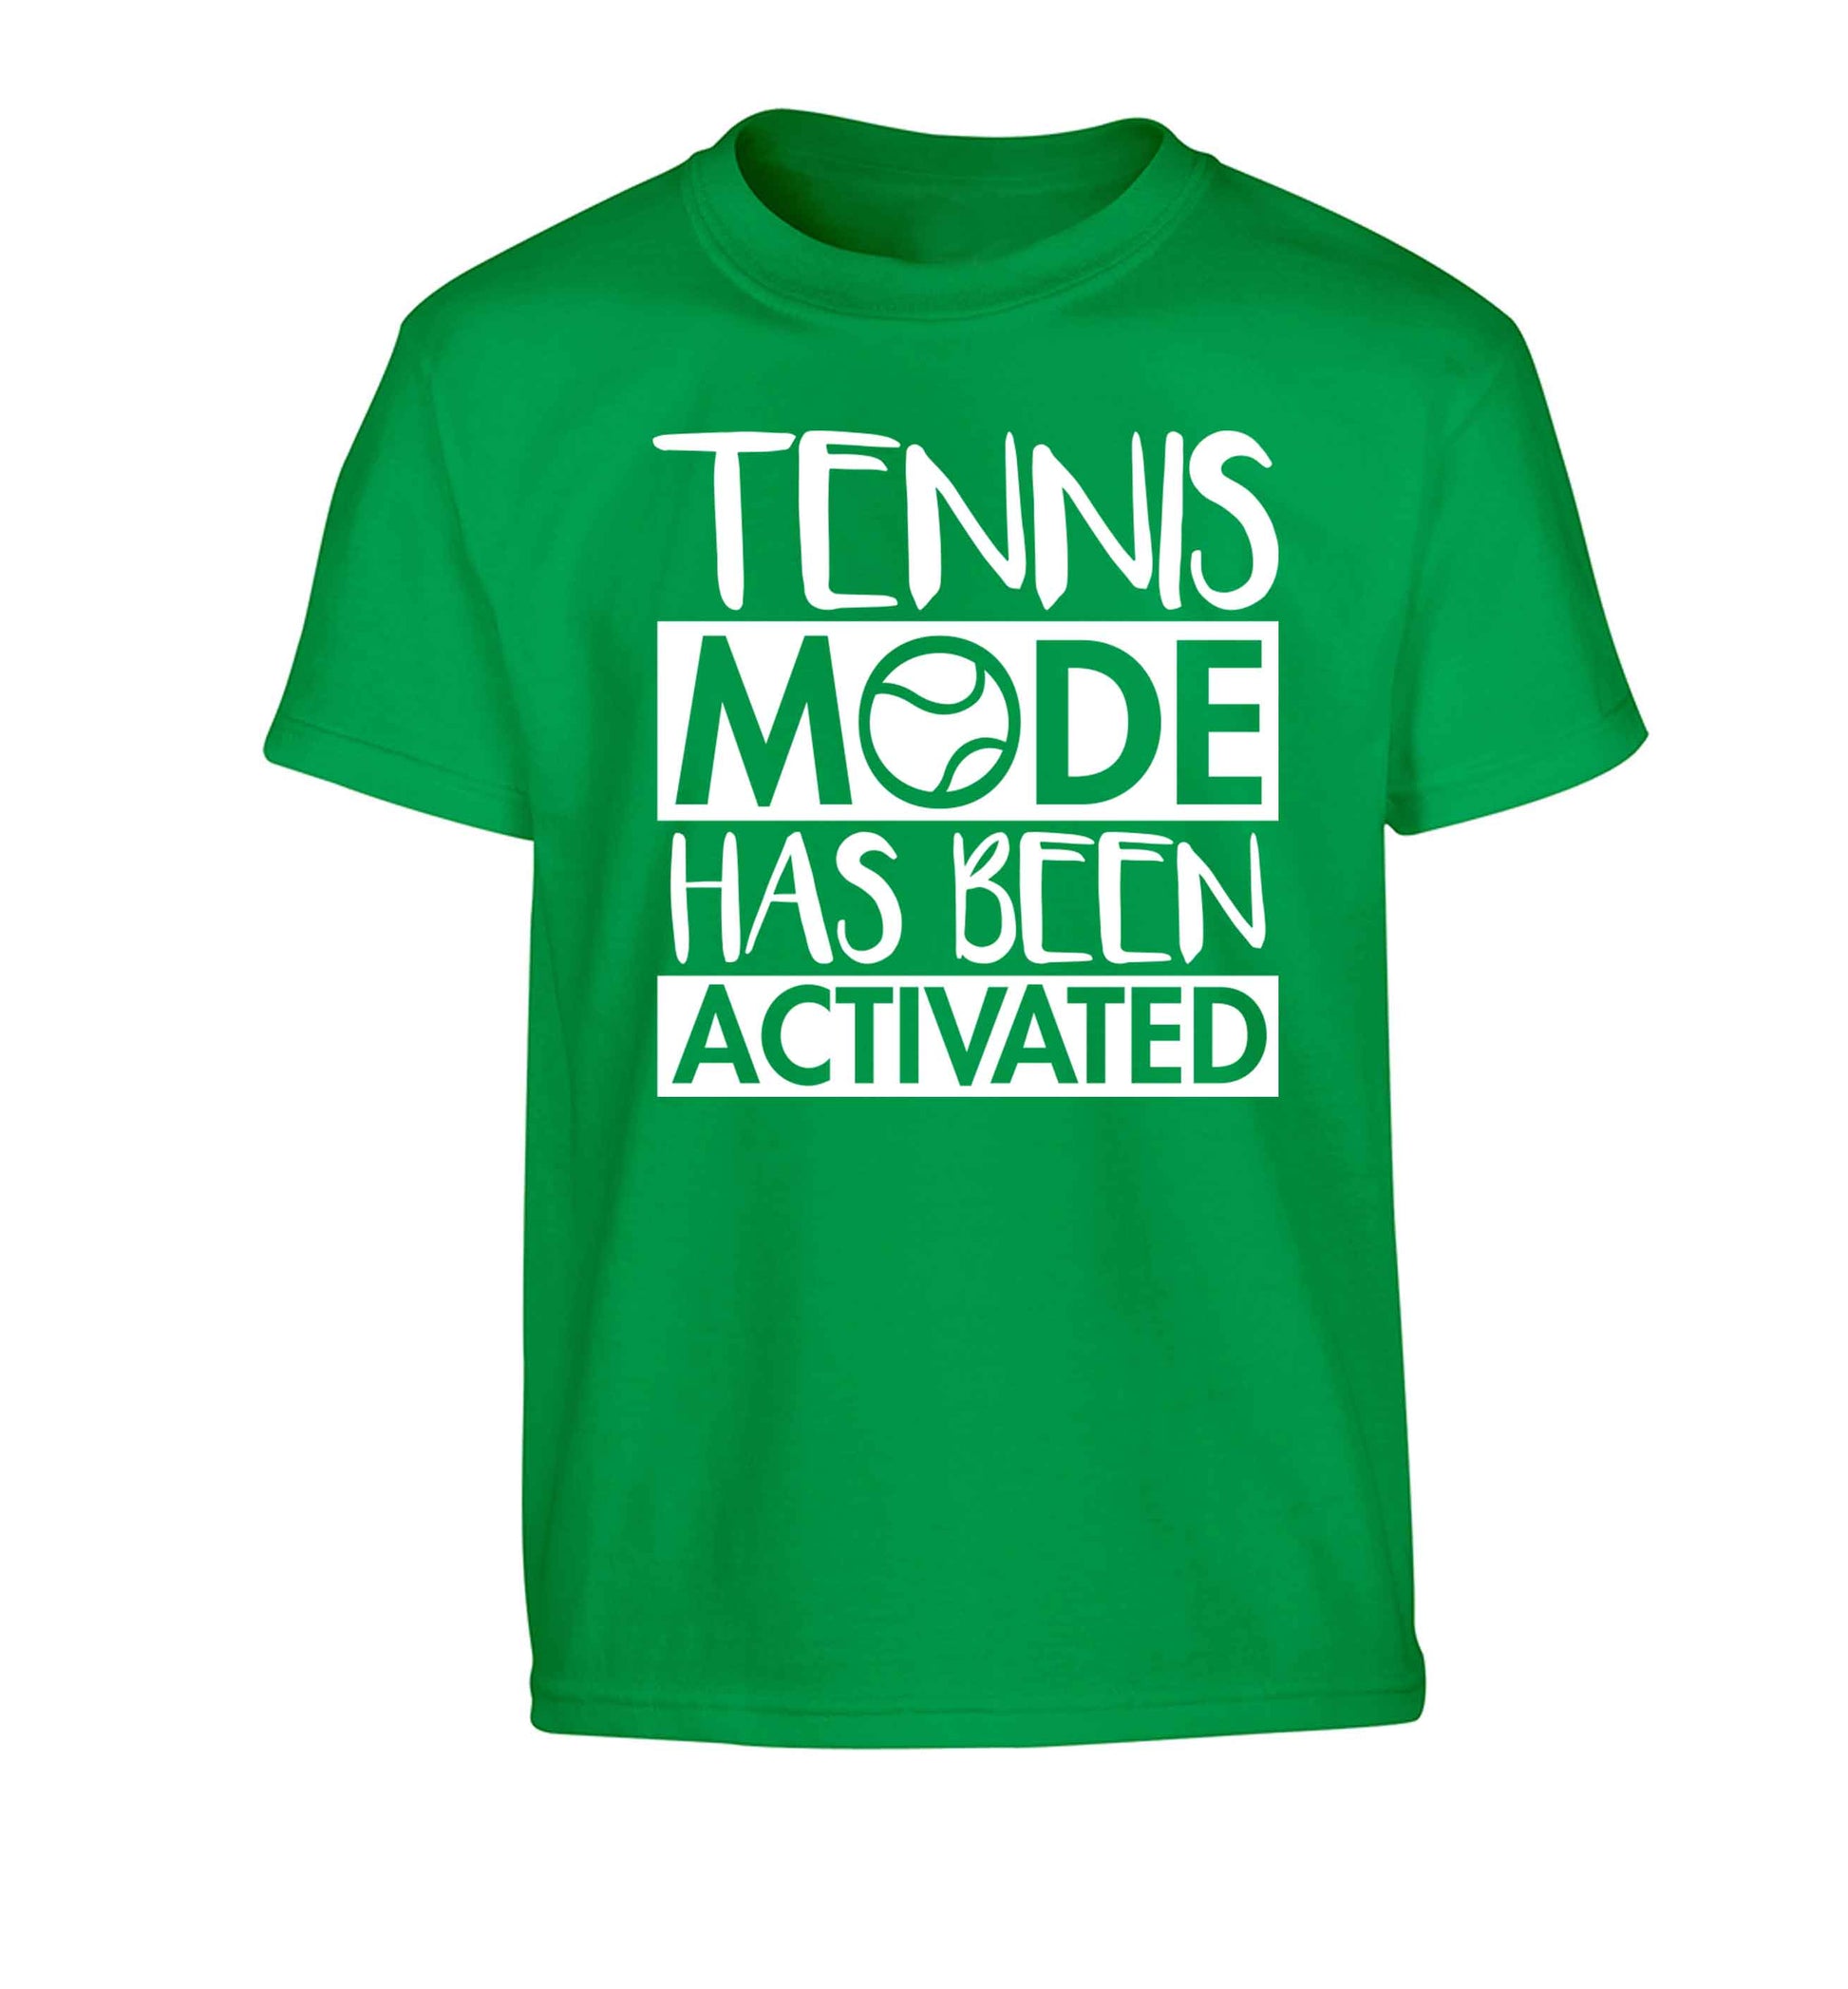 Tennis mode has been activated Children's green Tshirt 12-13 Years